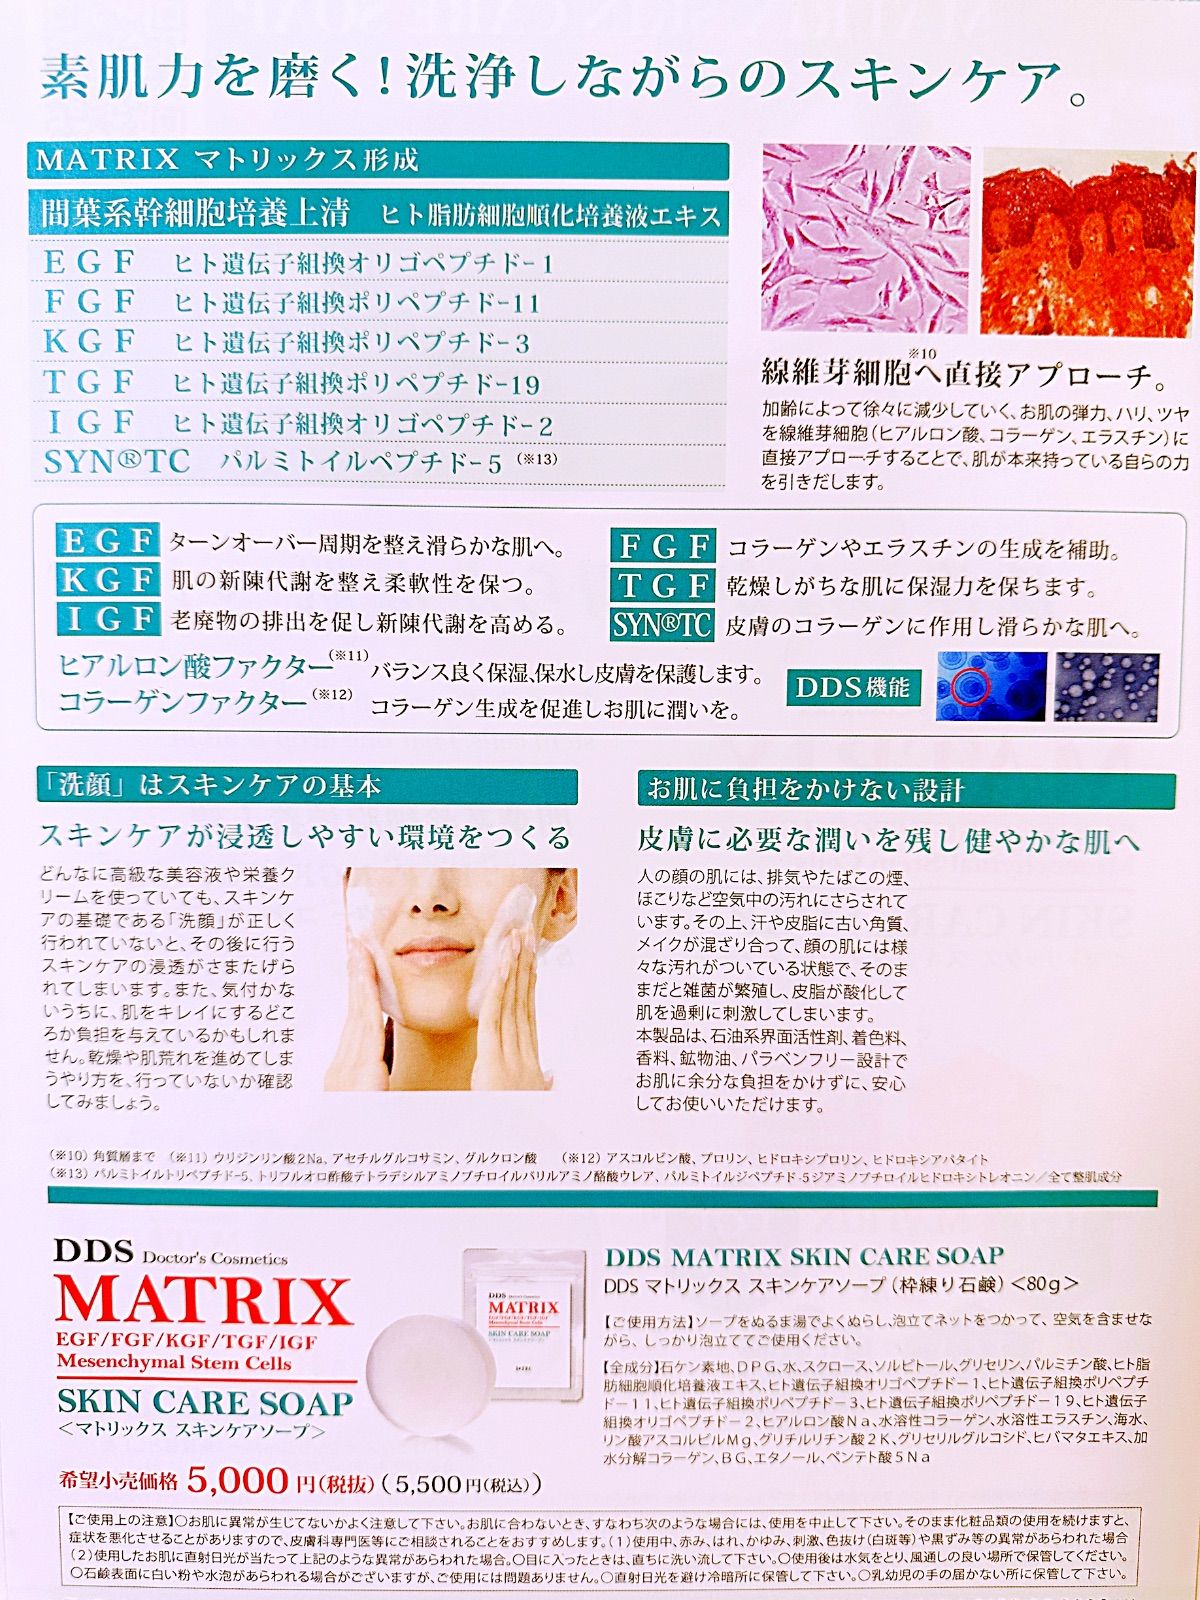 AiRS JAPAN DDSマトリクス専用スキンケアソープ 間葉系幹細胞 4個